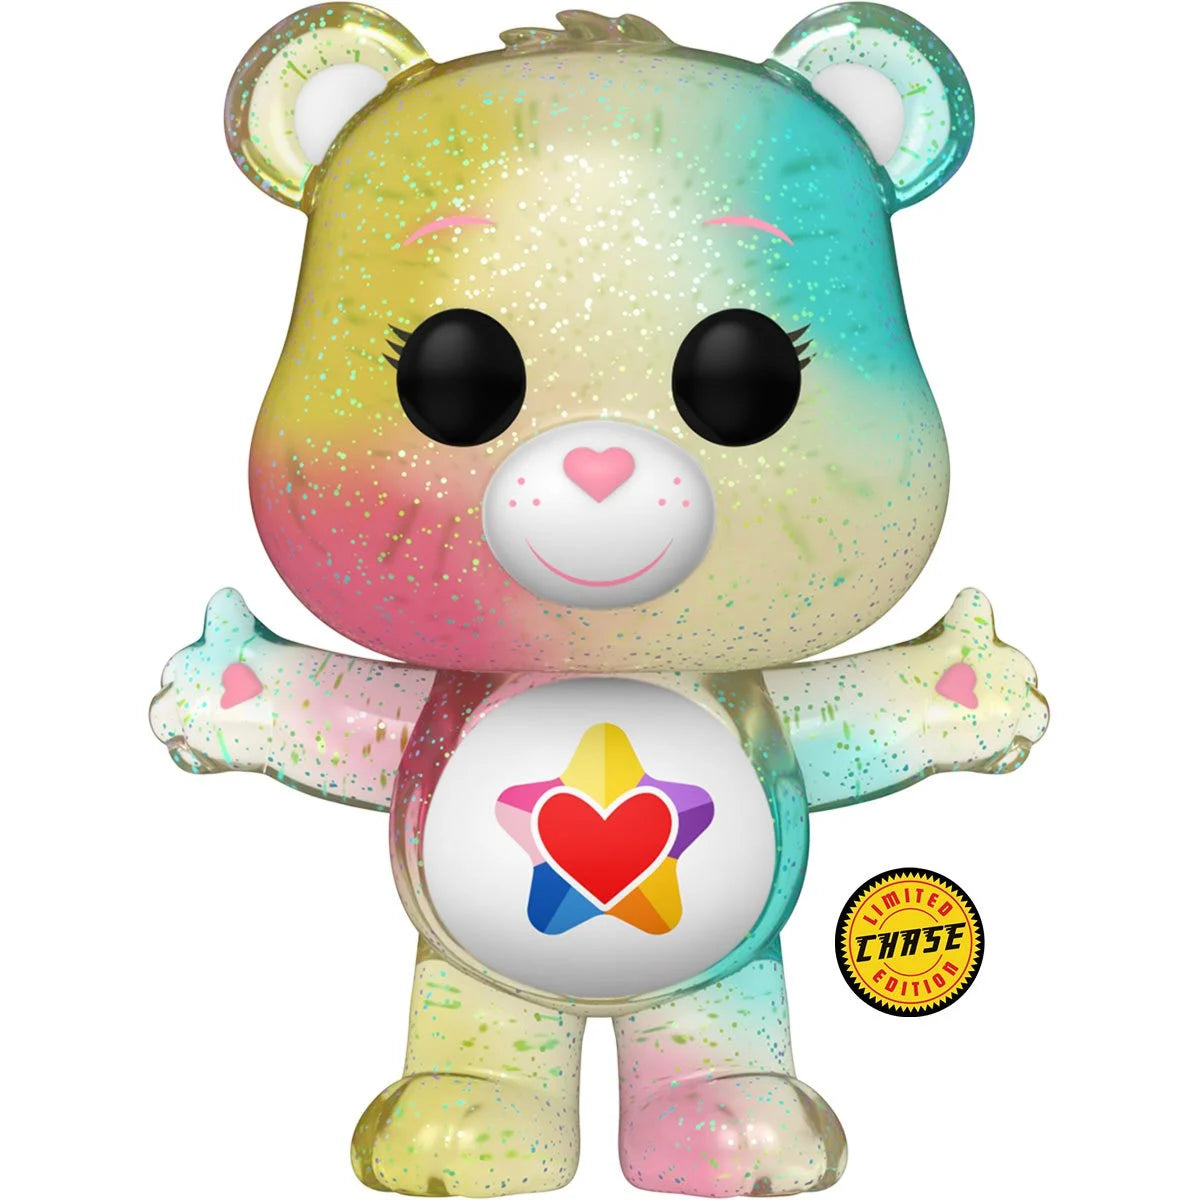 True Heart Bear Care Bears 40th Anniversary Pop! Vinyl Figure